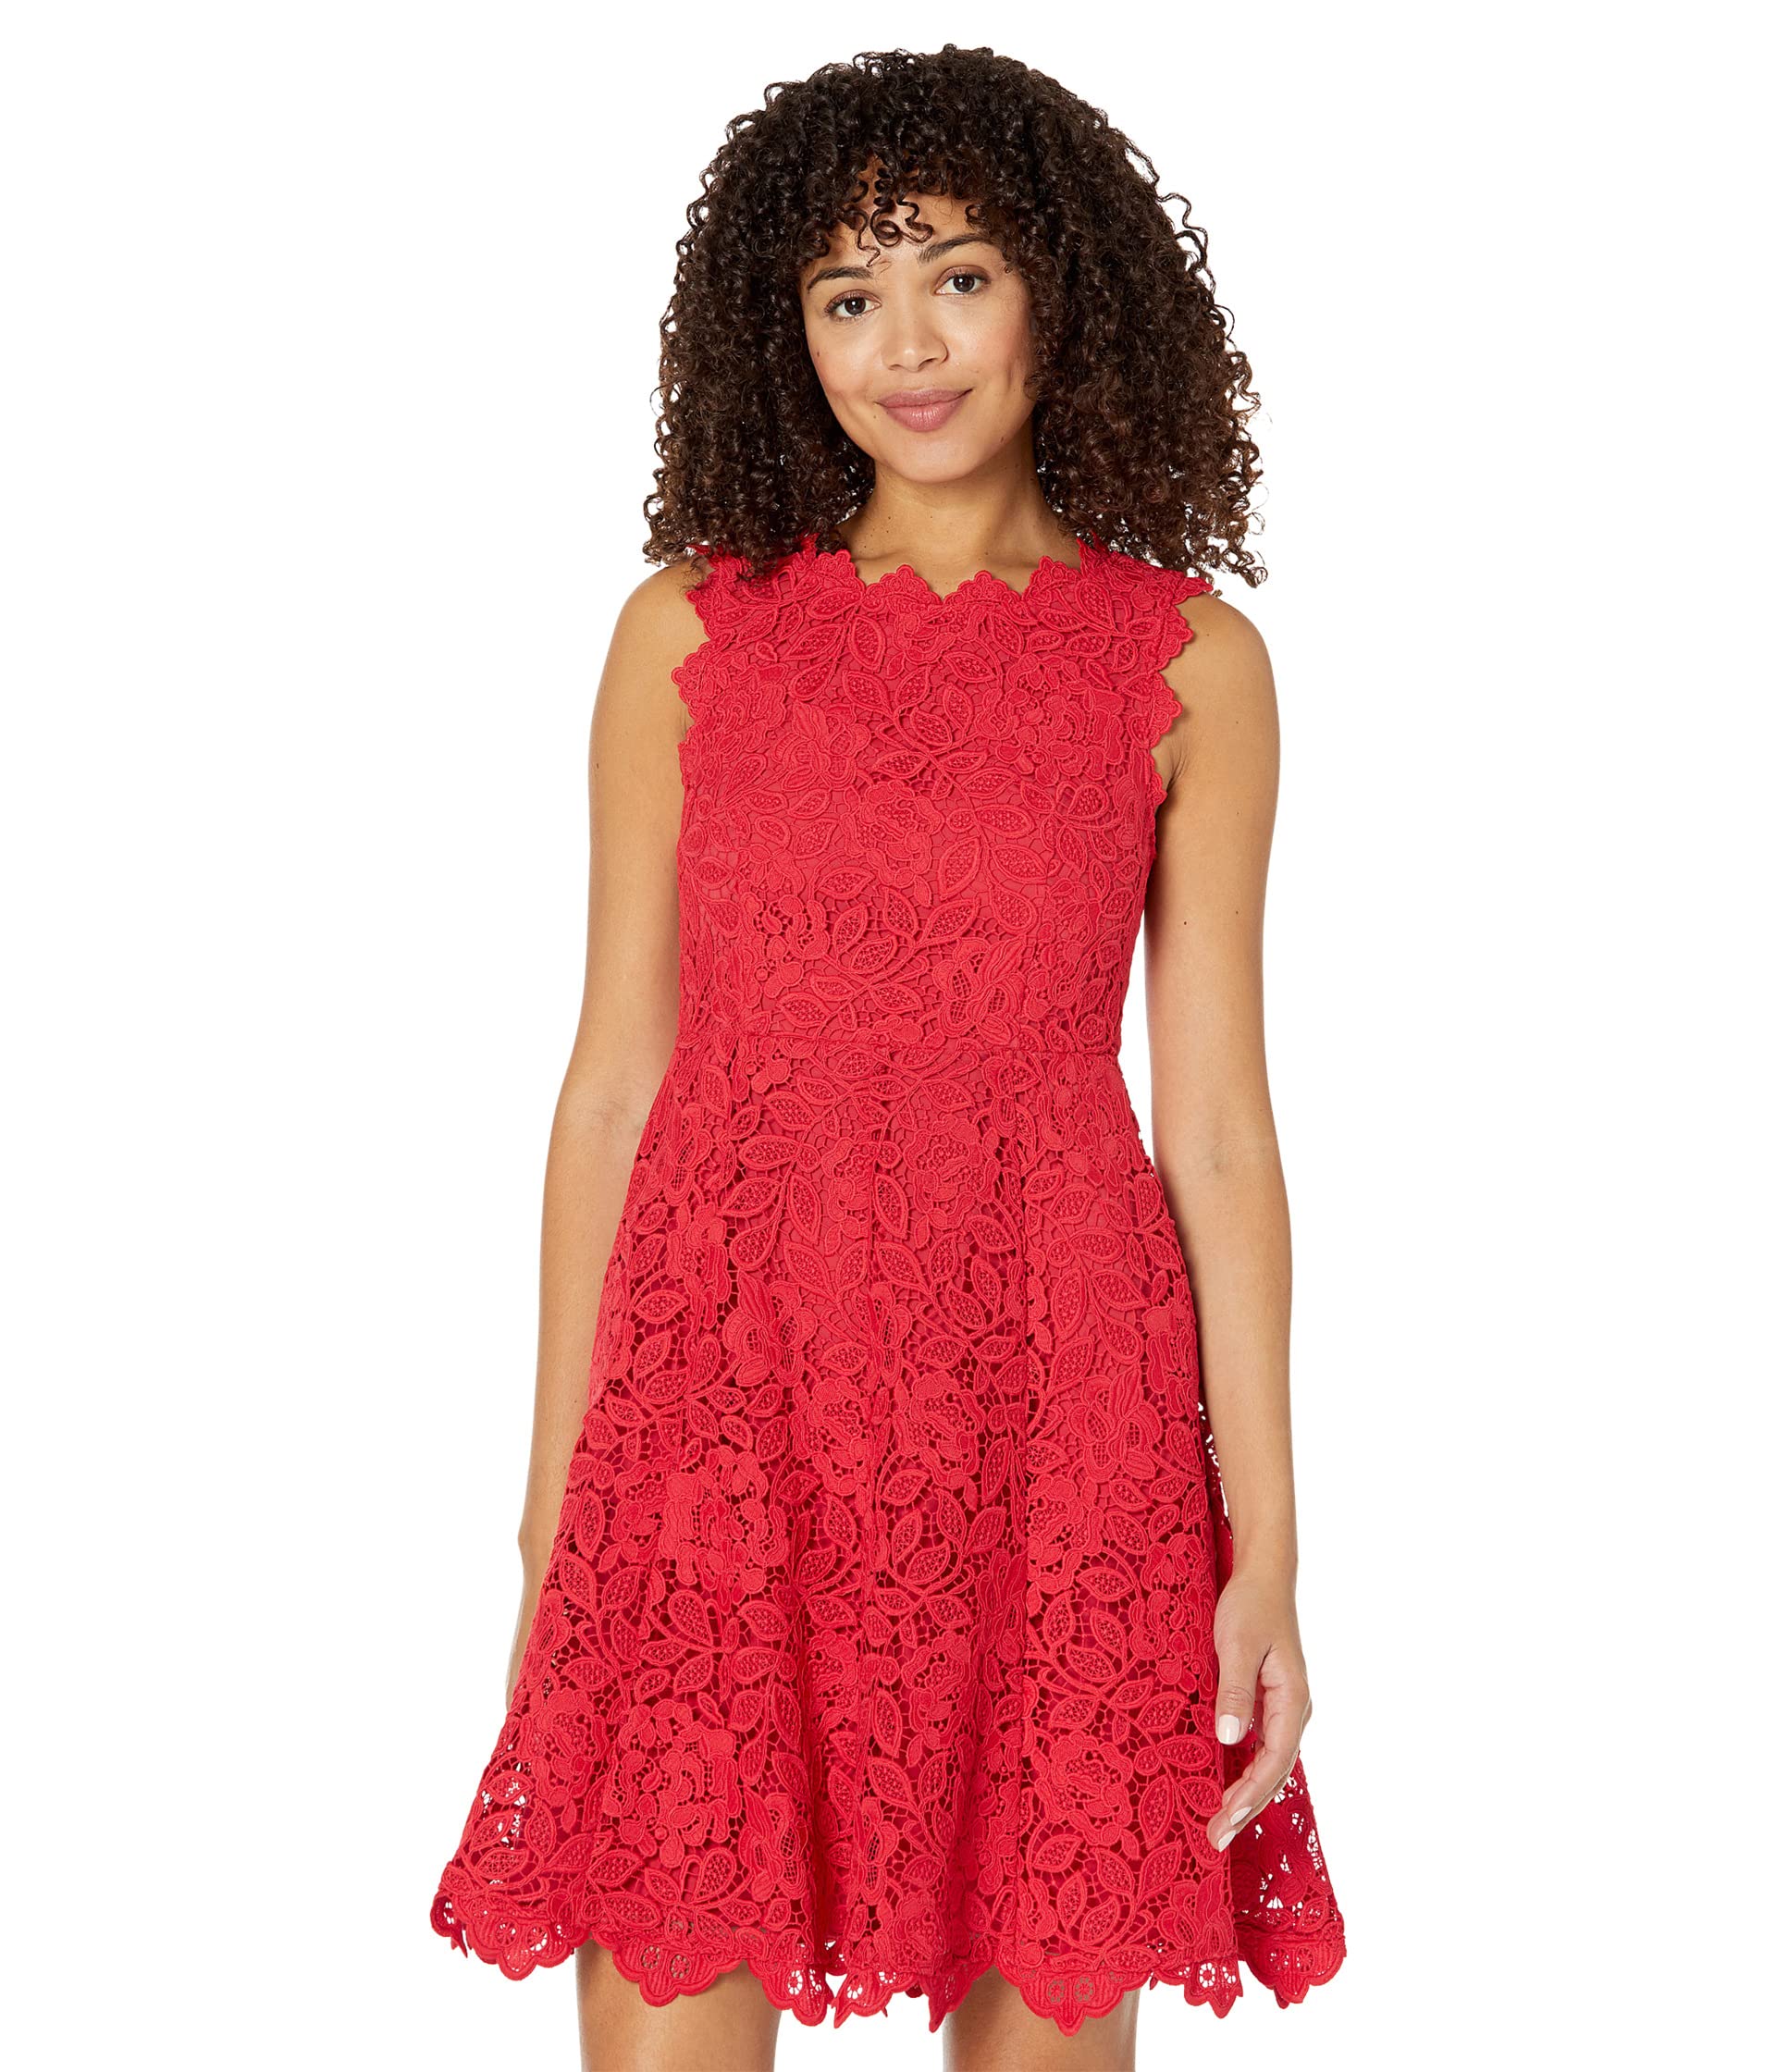 Платье Kate Spade New York, Floral Lace Dress платье kate spade new york floral lace dress цвет engine red